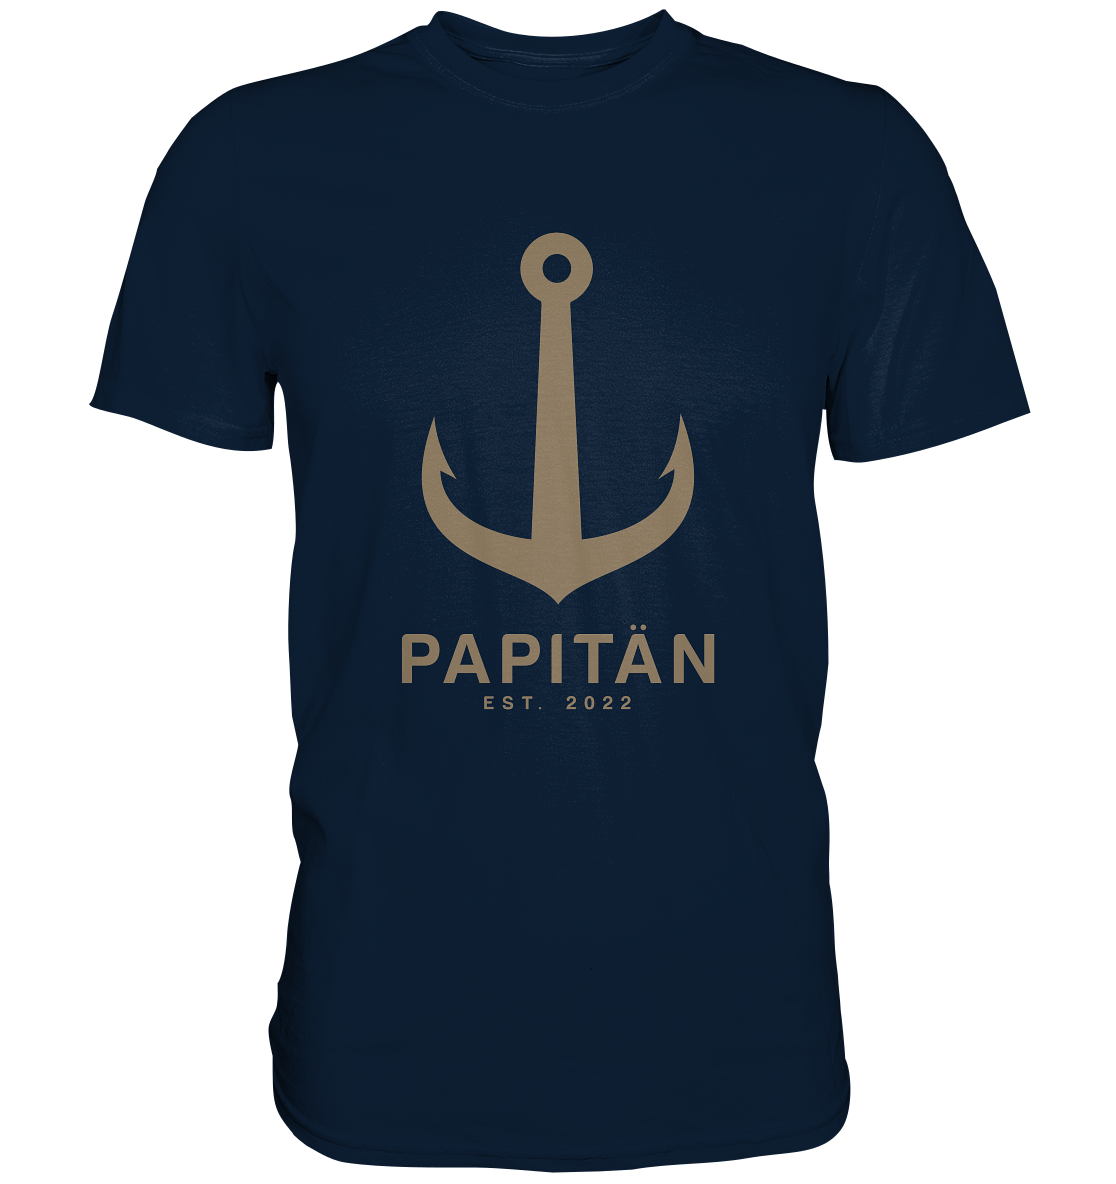 Papitan - Premium Shirt